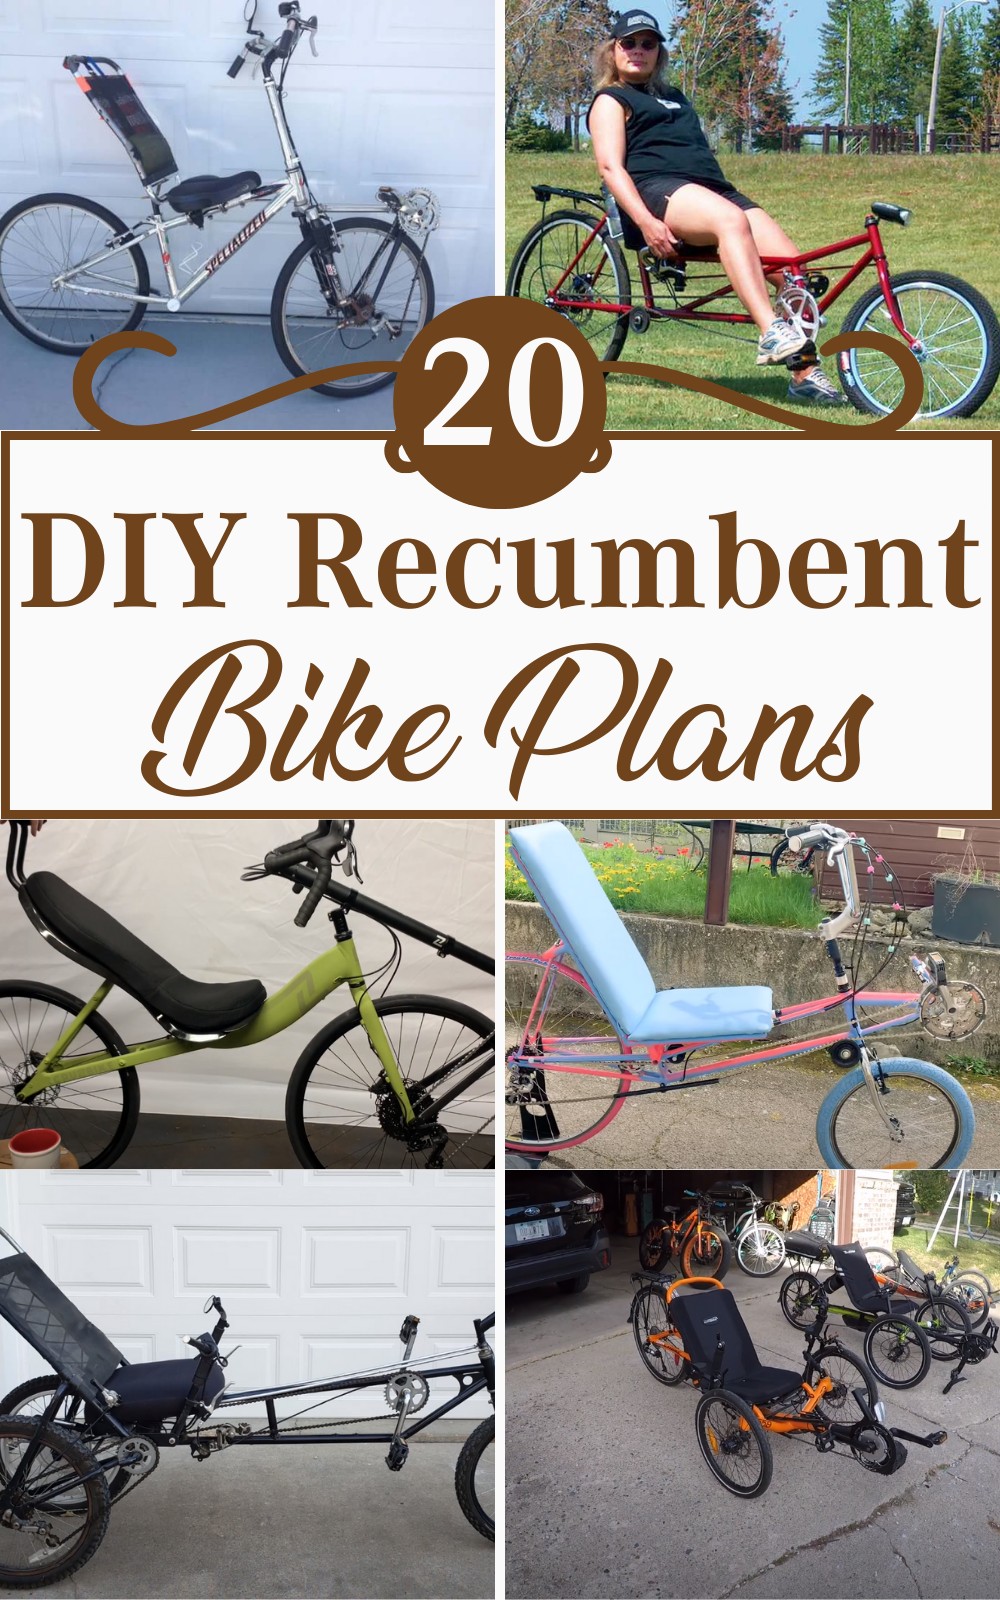 DIY Recumbent Bike Plans